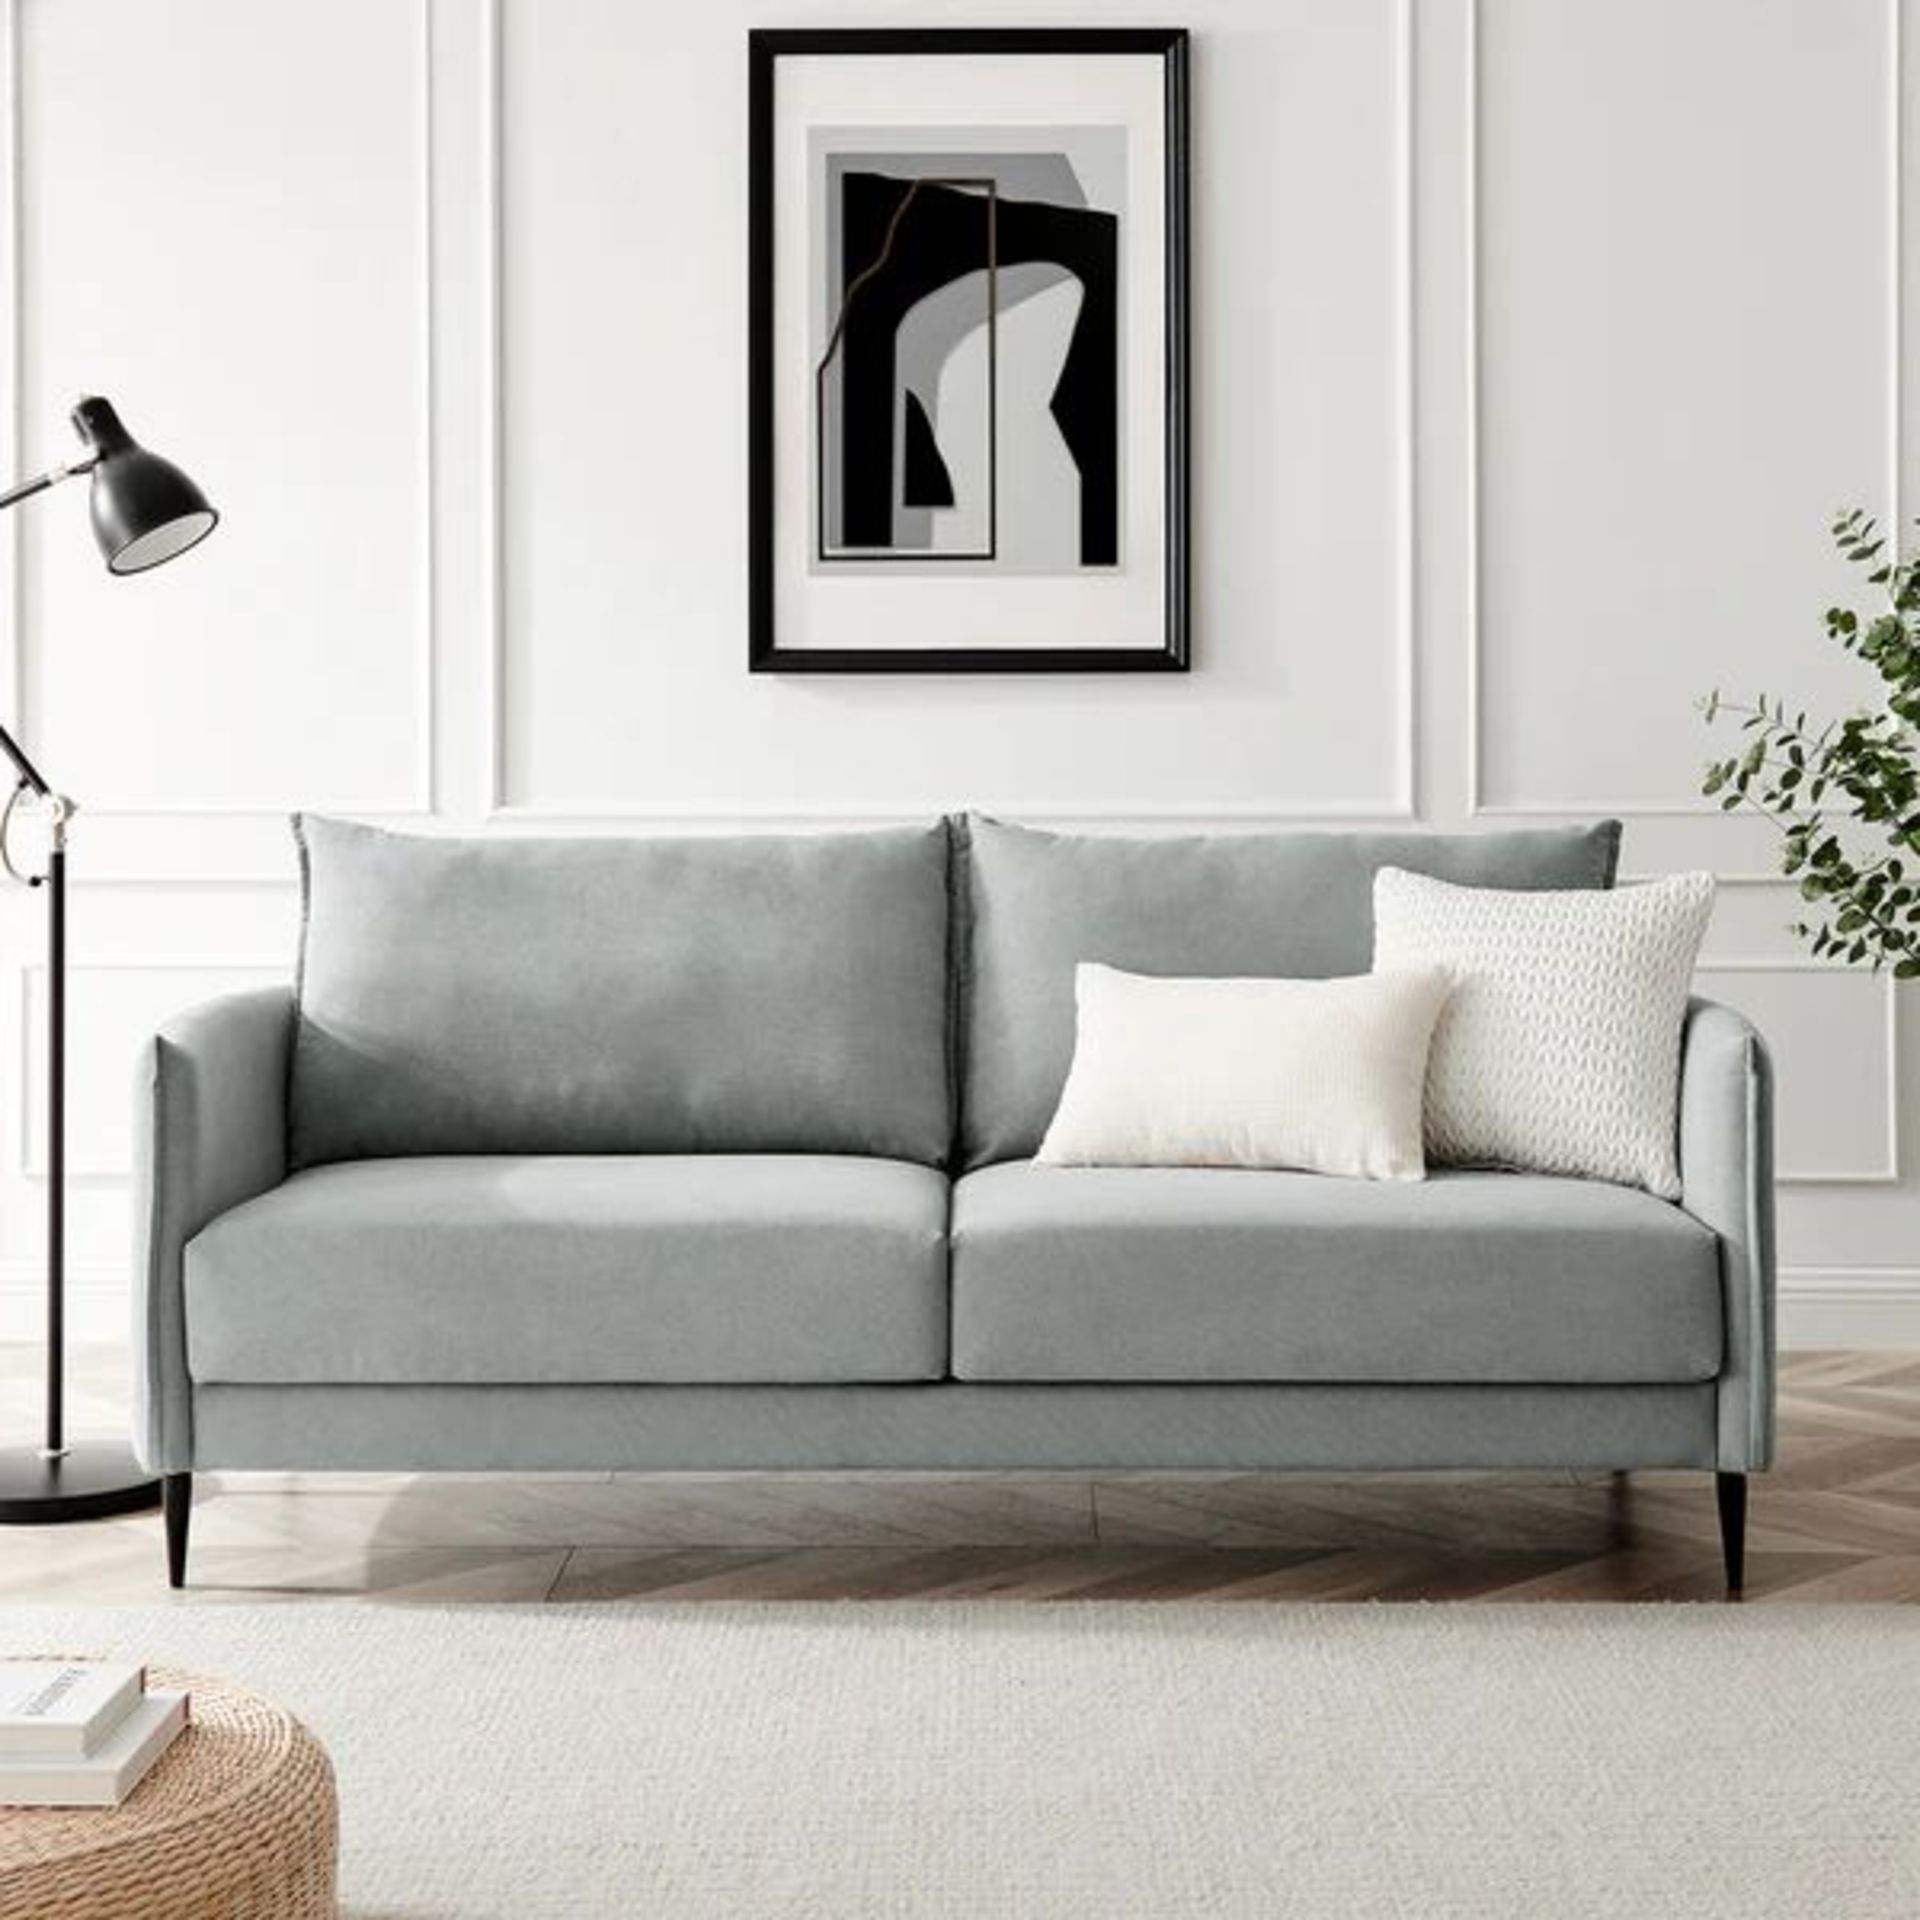 3 Seater Bari Light Grey Brushed Fabric Sofa. - SR5. RRP £519.99. Our Bari sofa features a sleek and